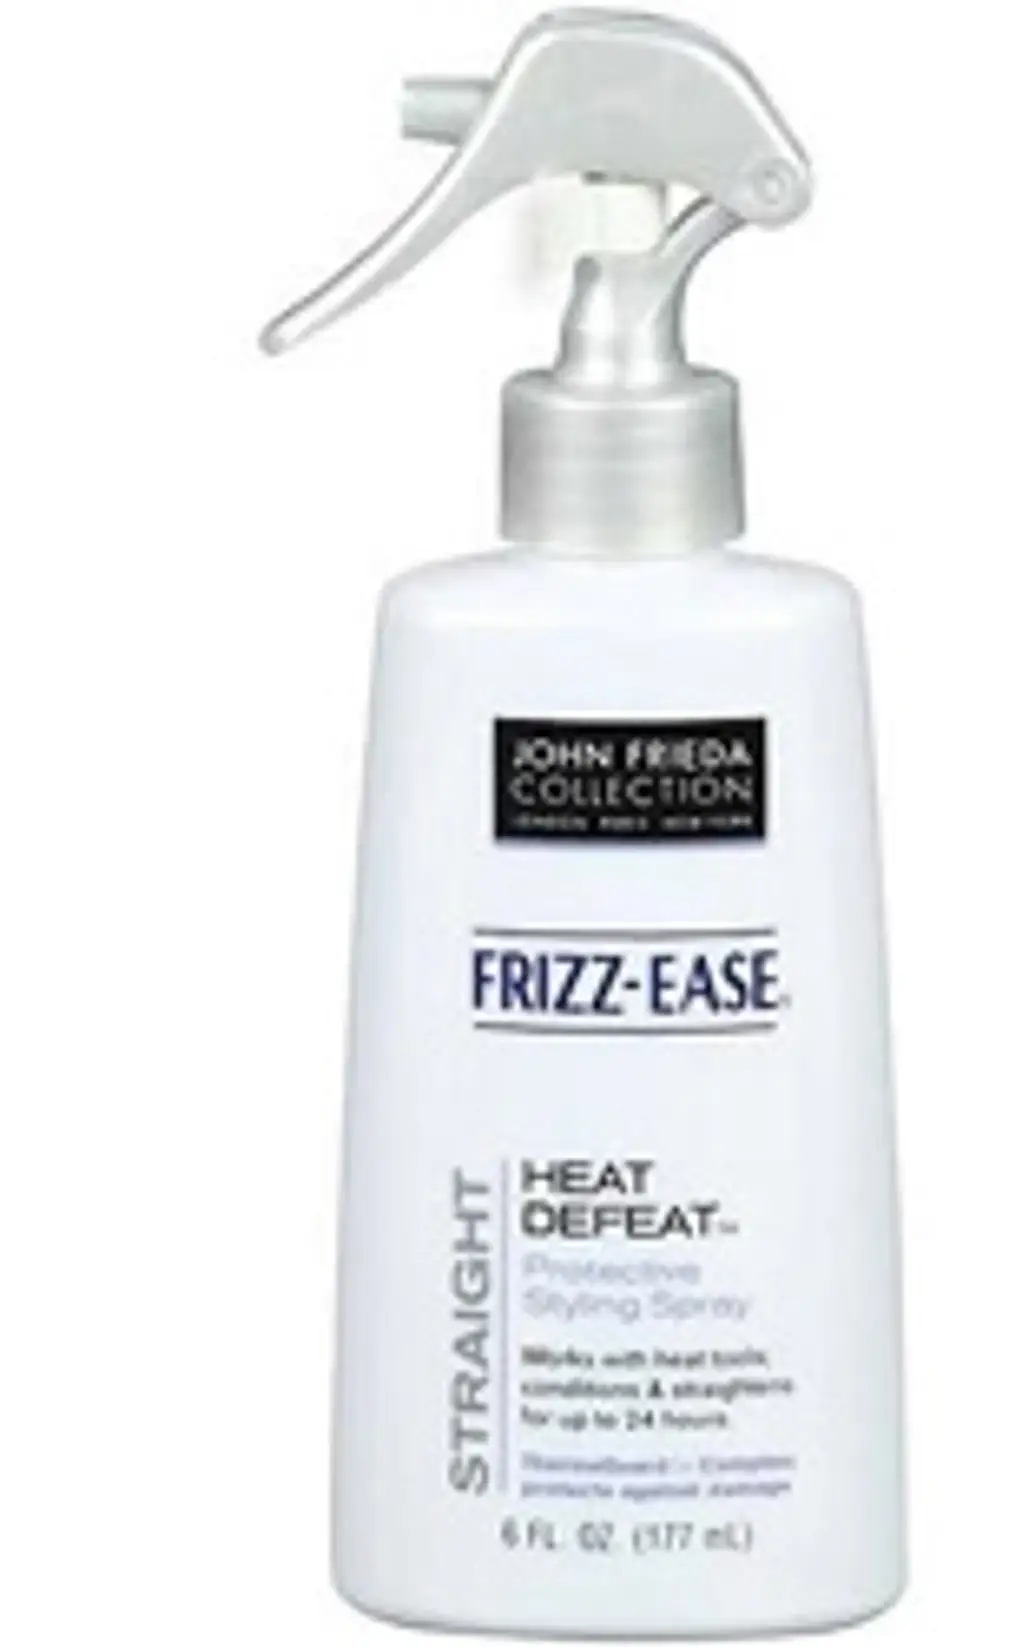 John Frieda Heat Defeat Protective Styling Spray Frizz-Ease